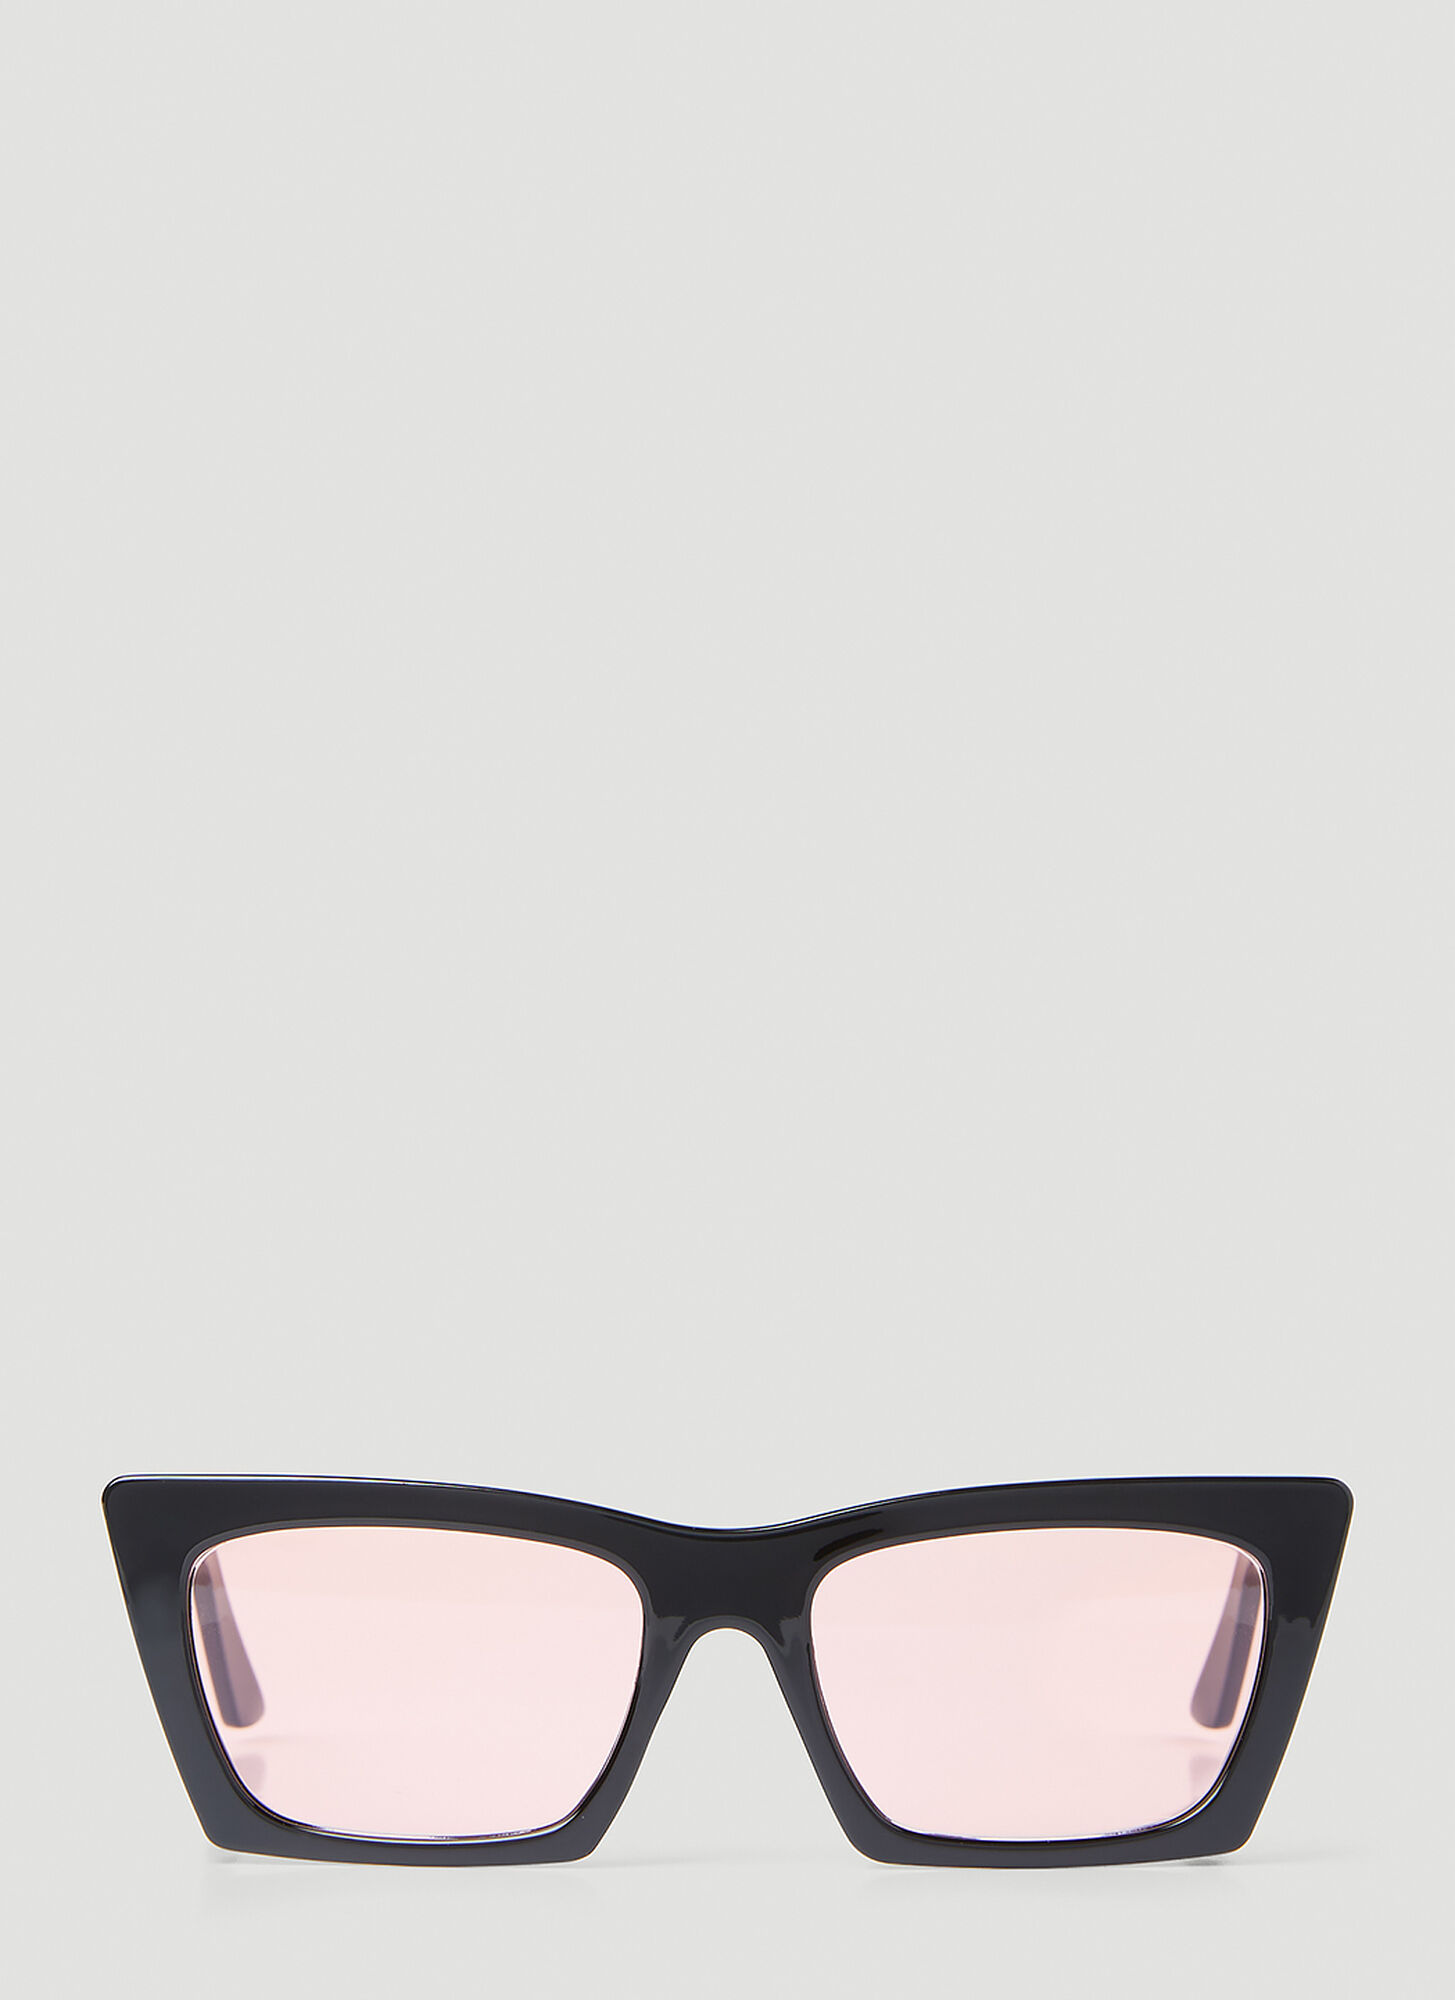 Clean Waves Type 4 Cat Eye Sunglasses Unisex Black